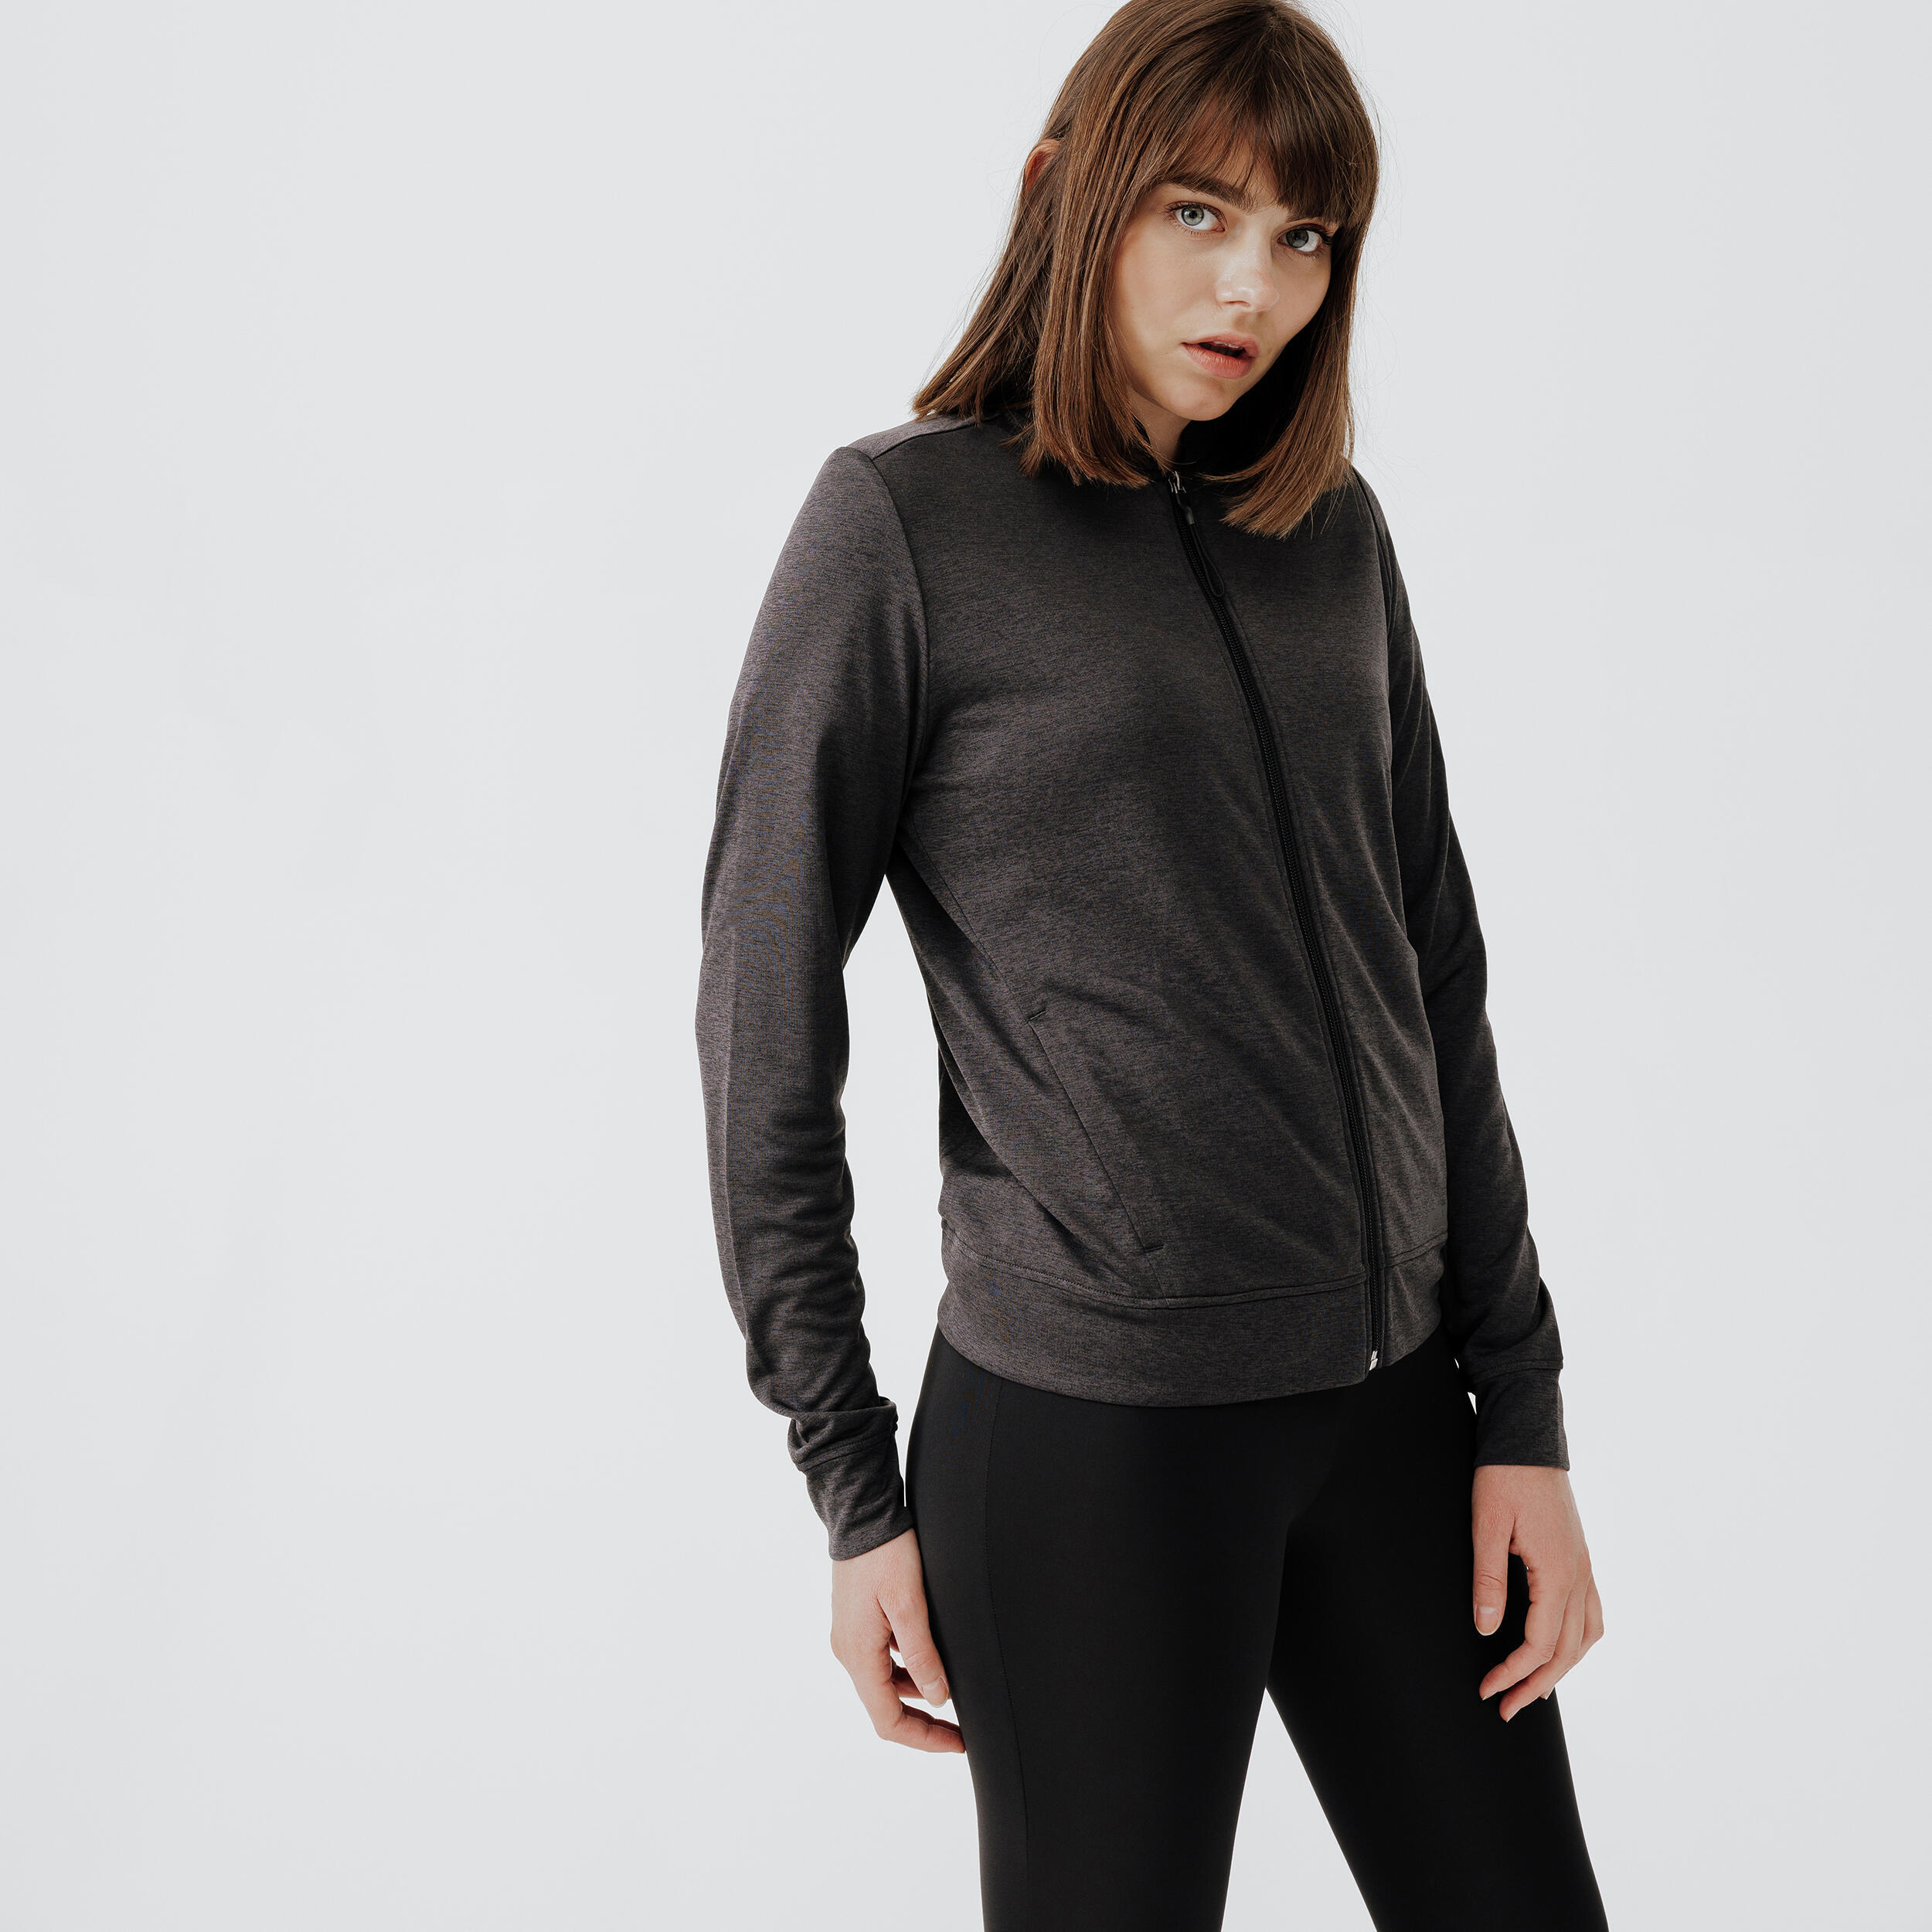 Women's breathable running jacket Dry - black 4/11